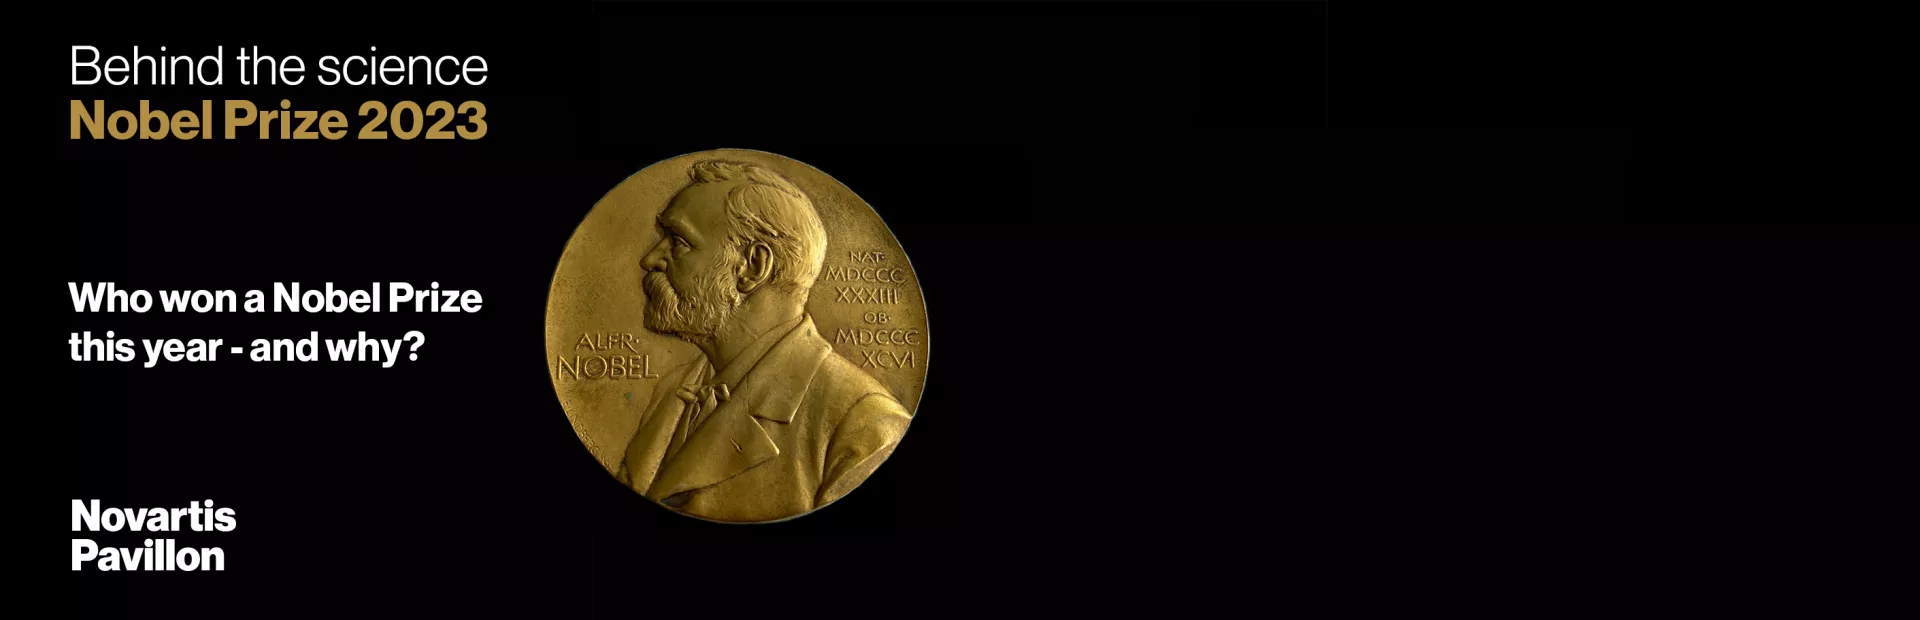 Behind the science: Nobel Prize 2023